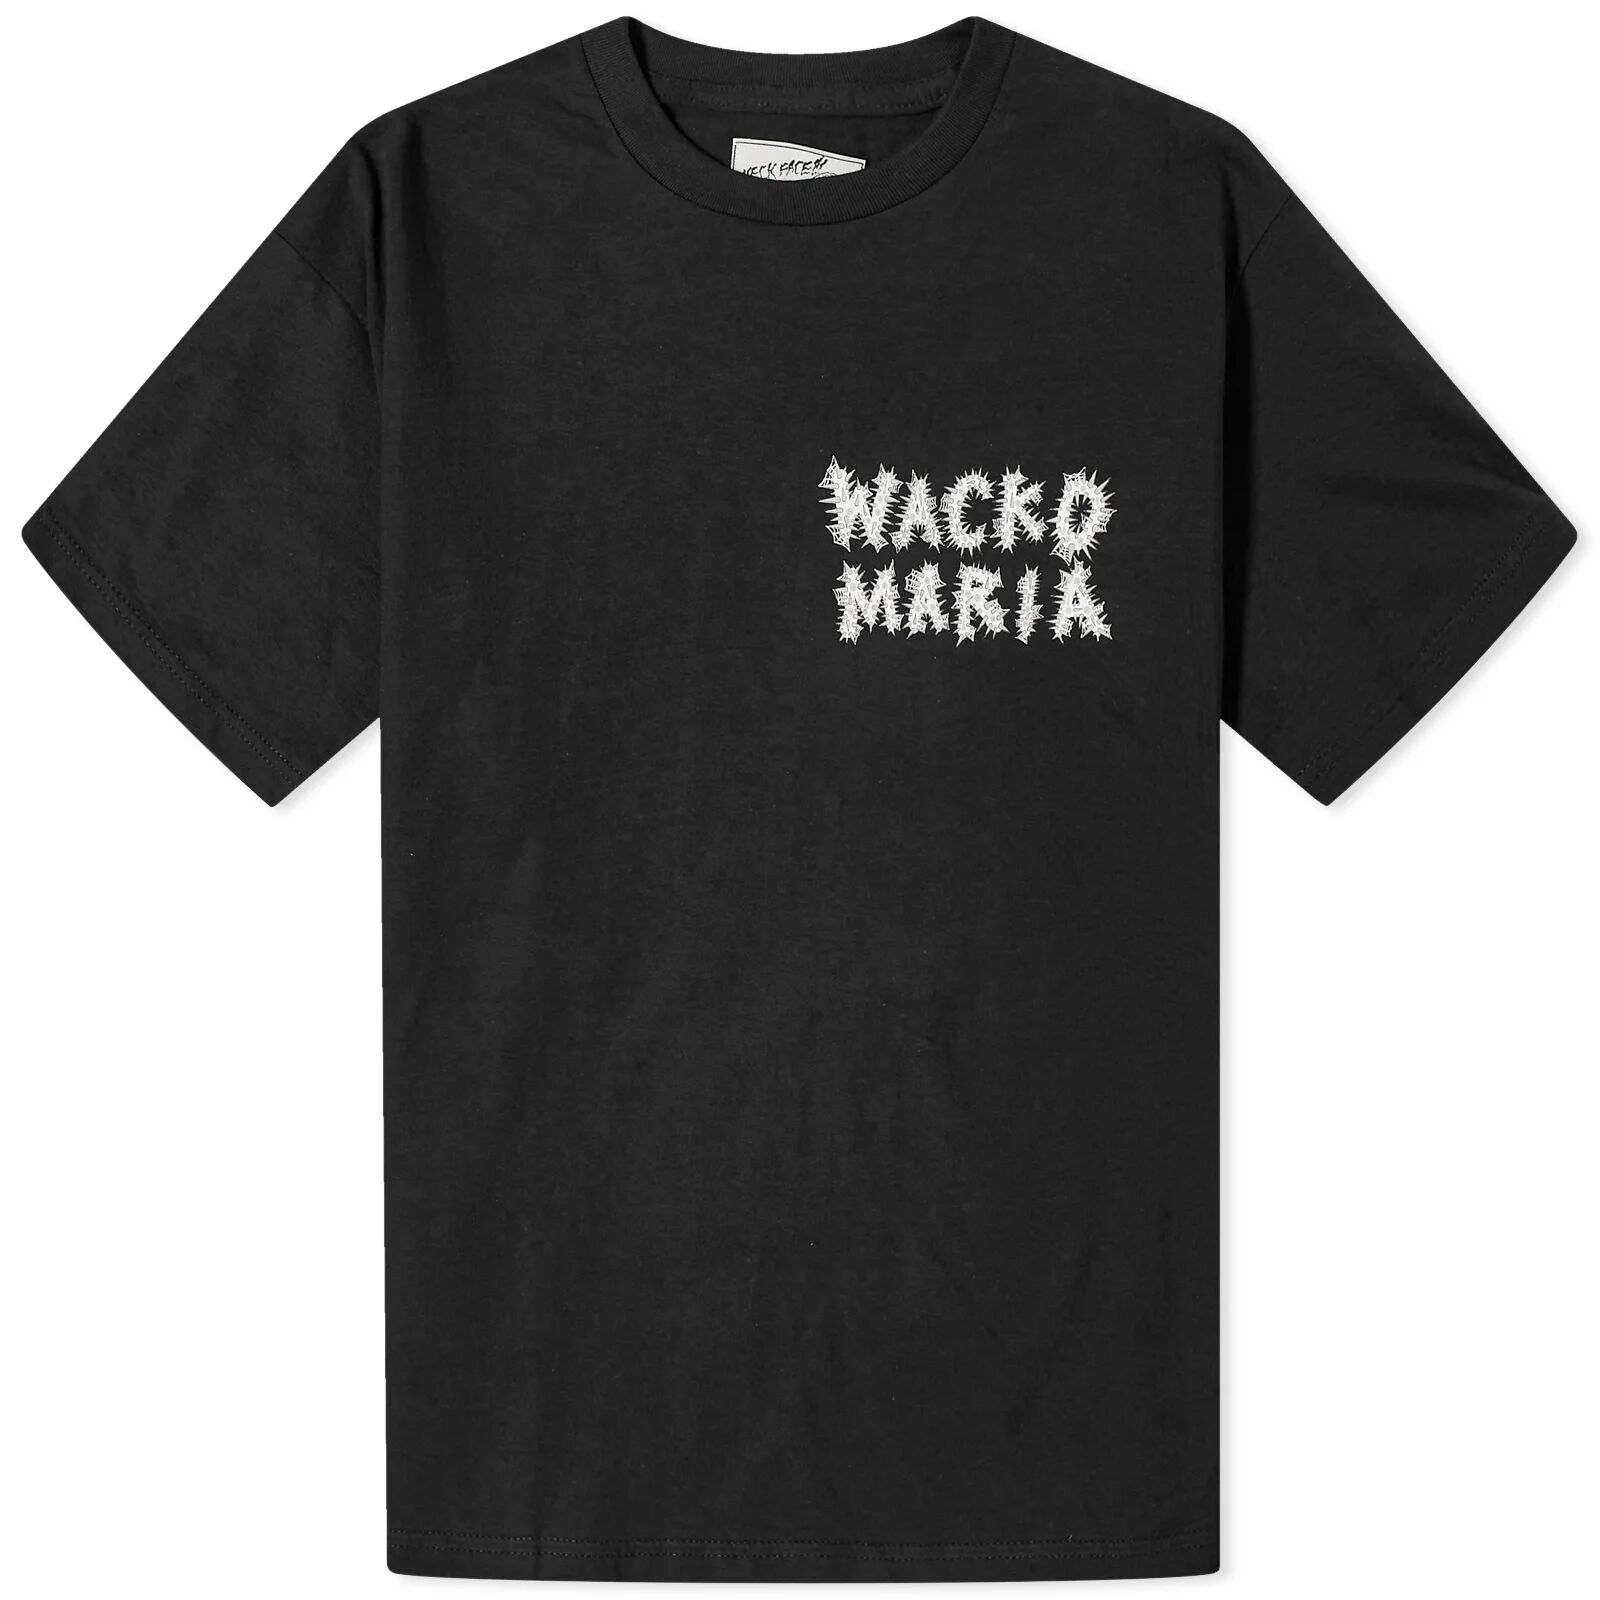 Wacko Maria Men's x Neckface Type 5 T-Shirt in Black, Size Small